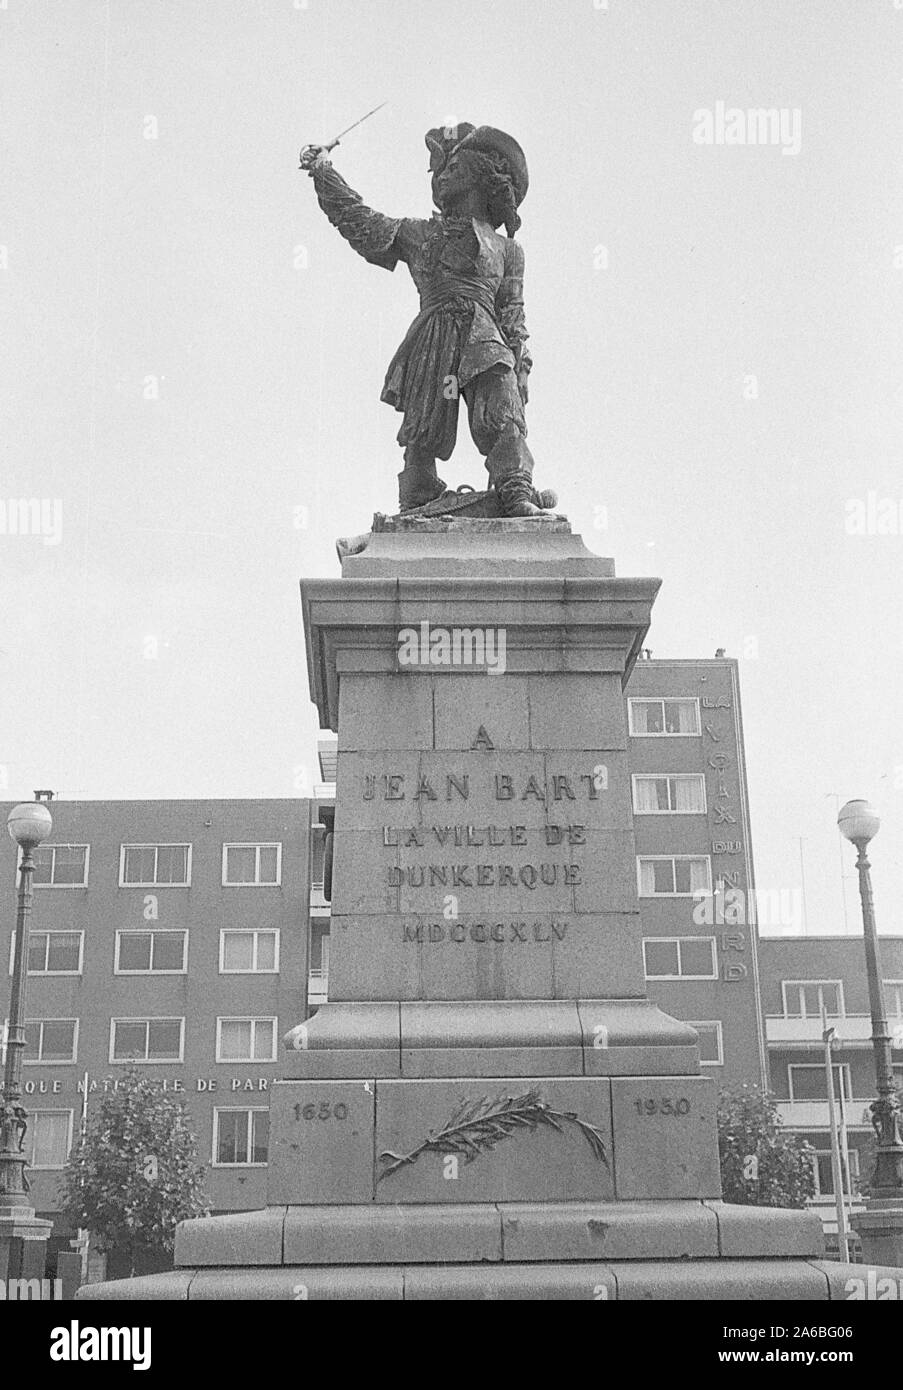 La sculpture de Jean Bart à Dunkerque, France Banque D'Images